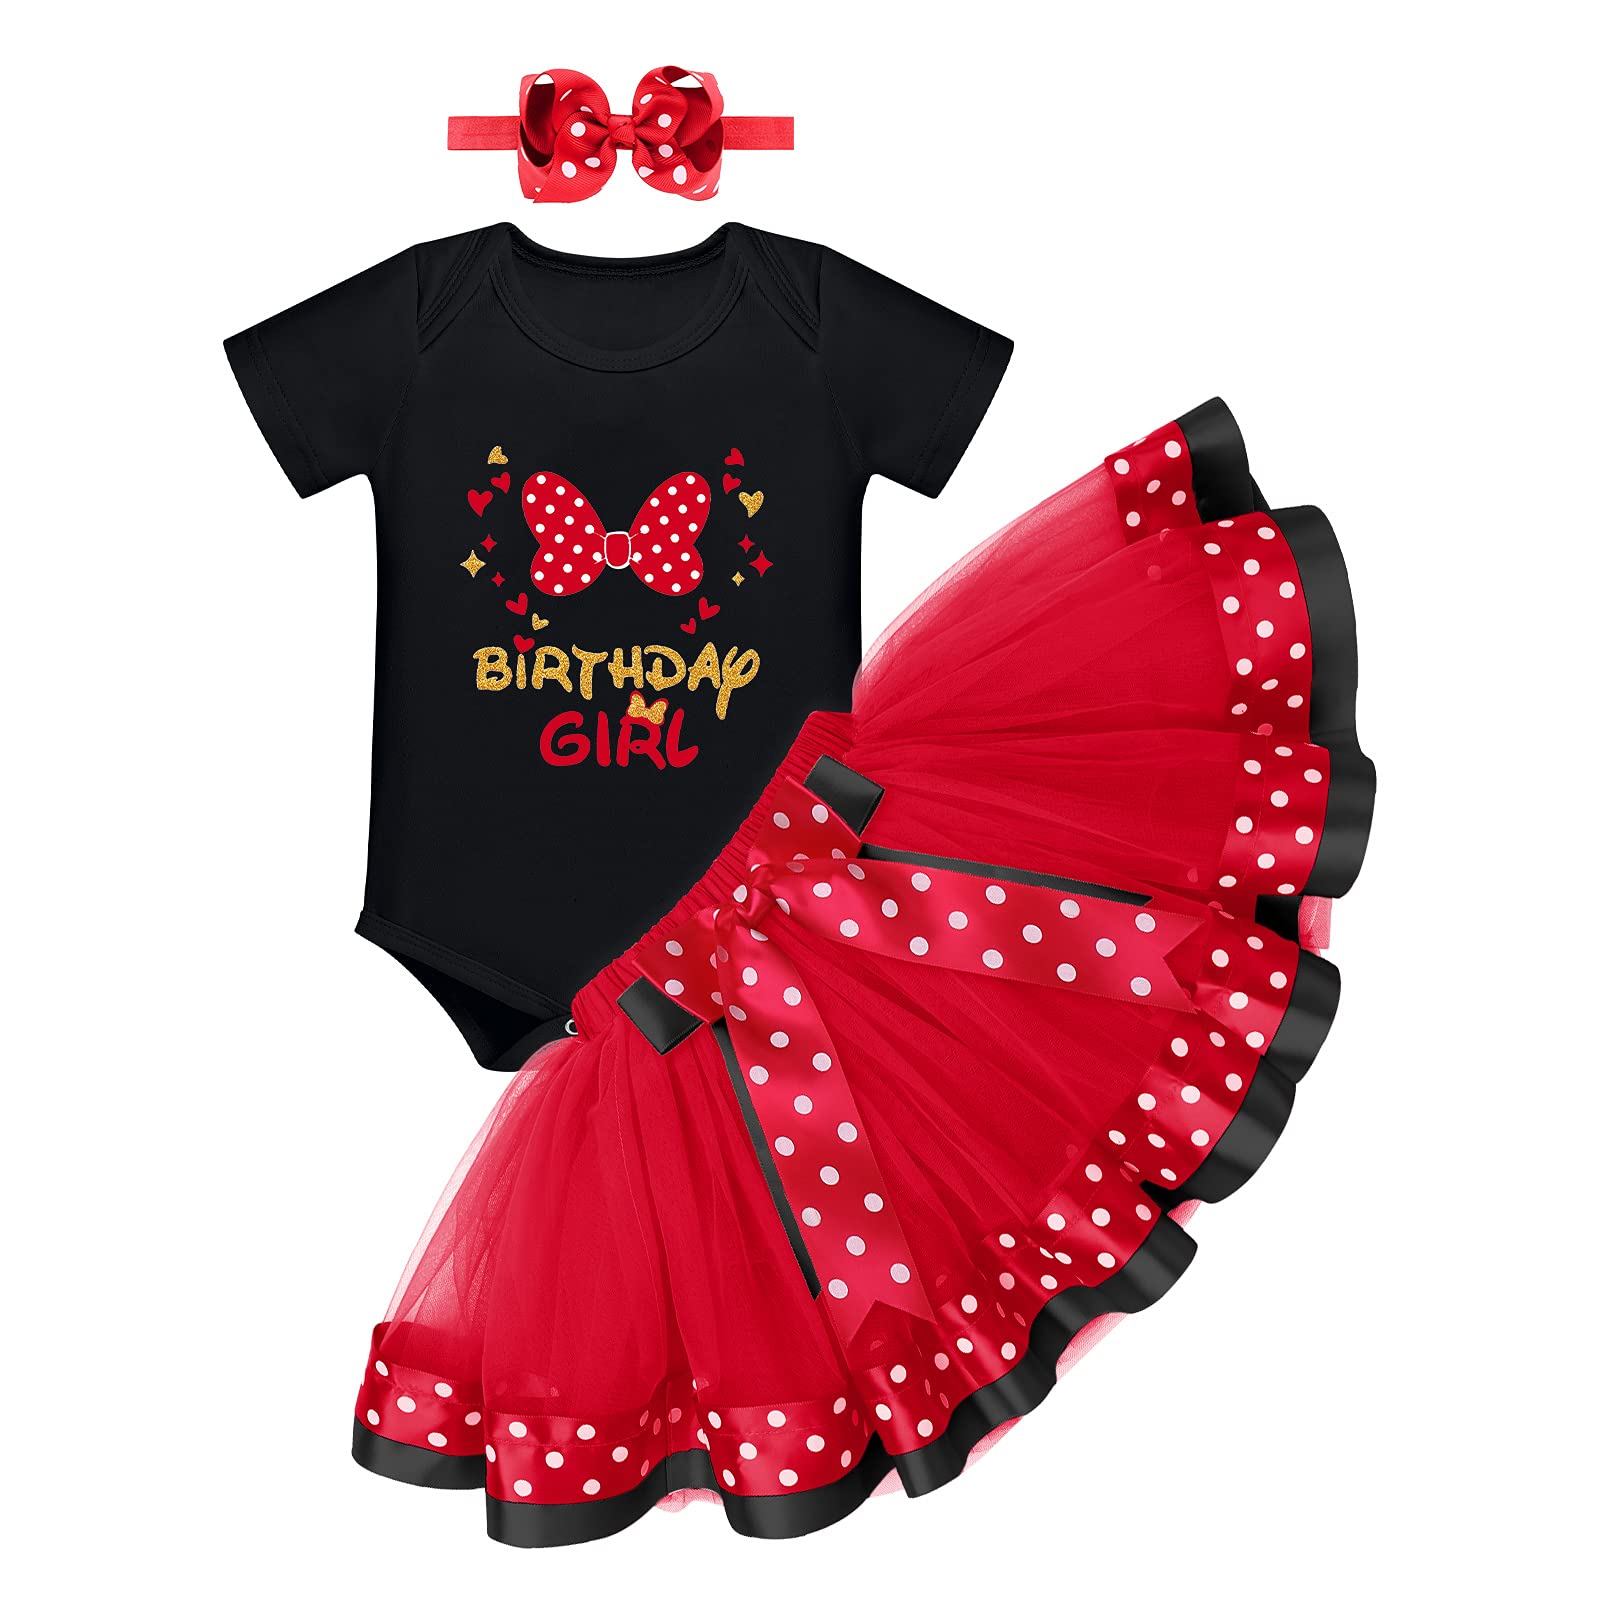 Baby Girls Half 1st 2nd Birthday Outfit Romper Polka Dots Tutu Skirt Mouse Bowknot Headband for Cake Smash Photo Shoot